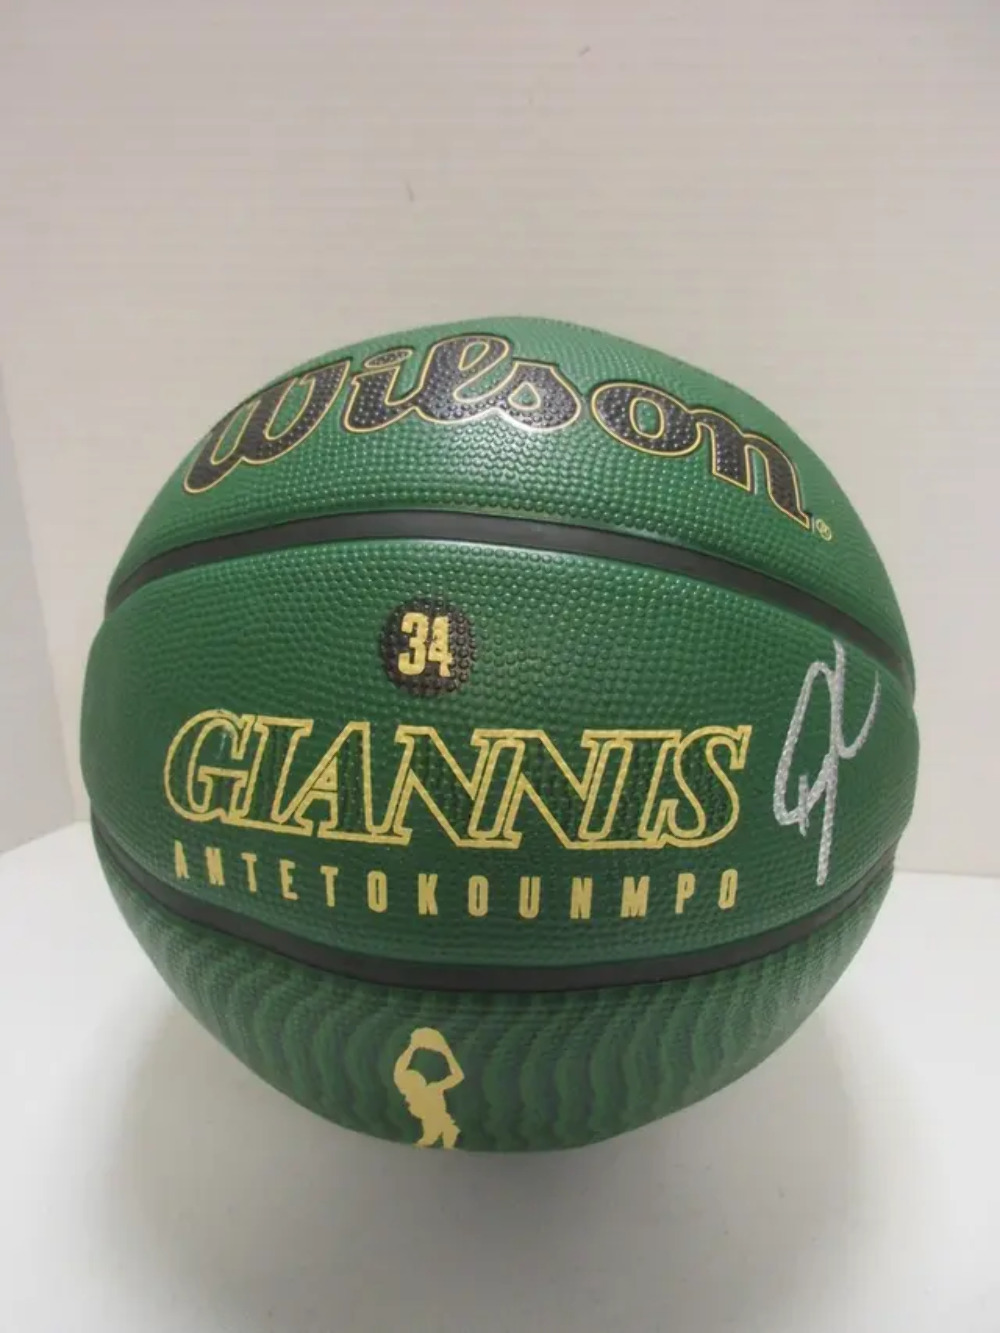 Giannis Antetokounmpo of the Milwaukee Bucks signed autographed logo basketball